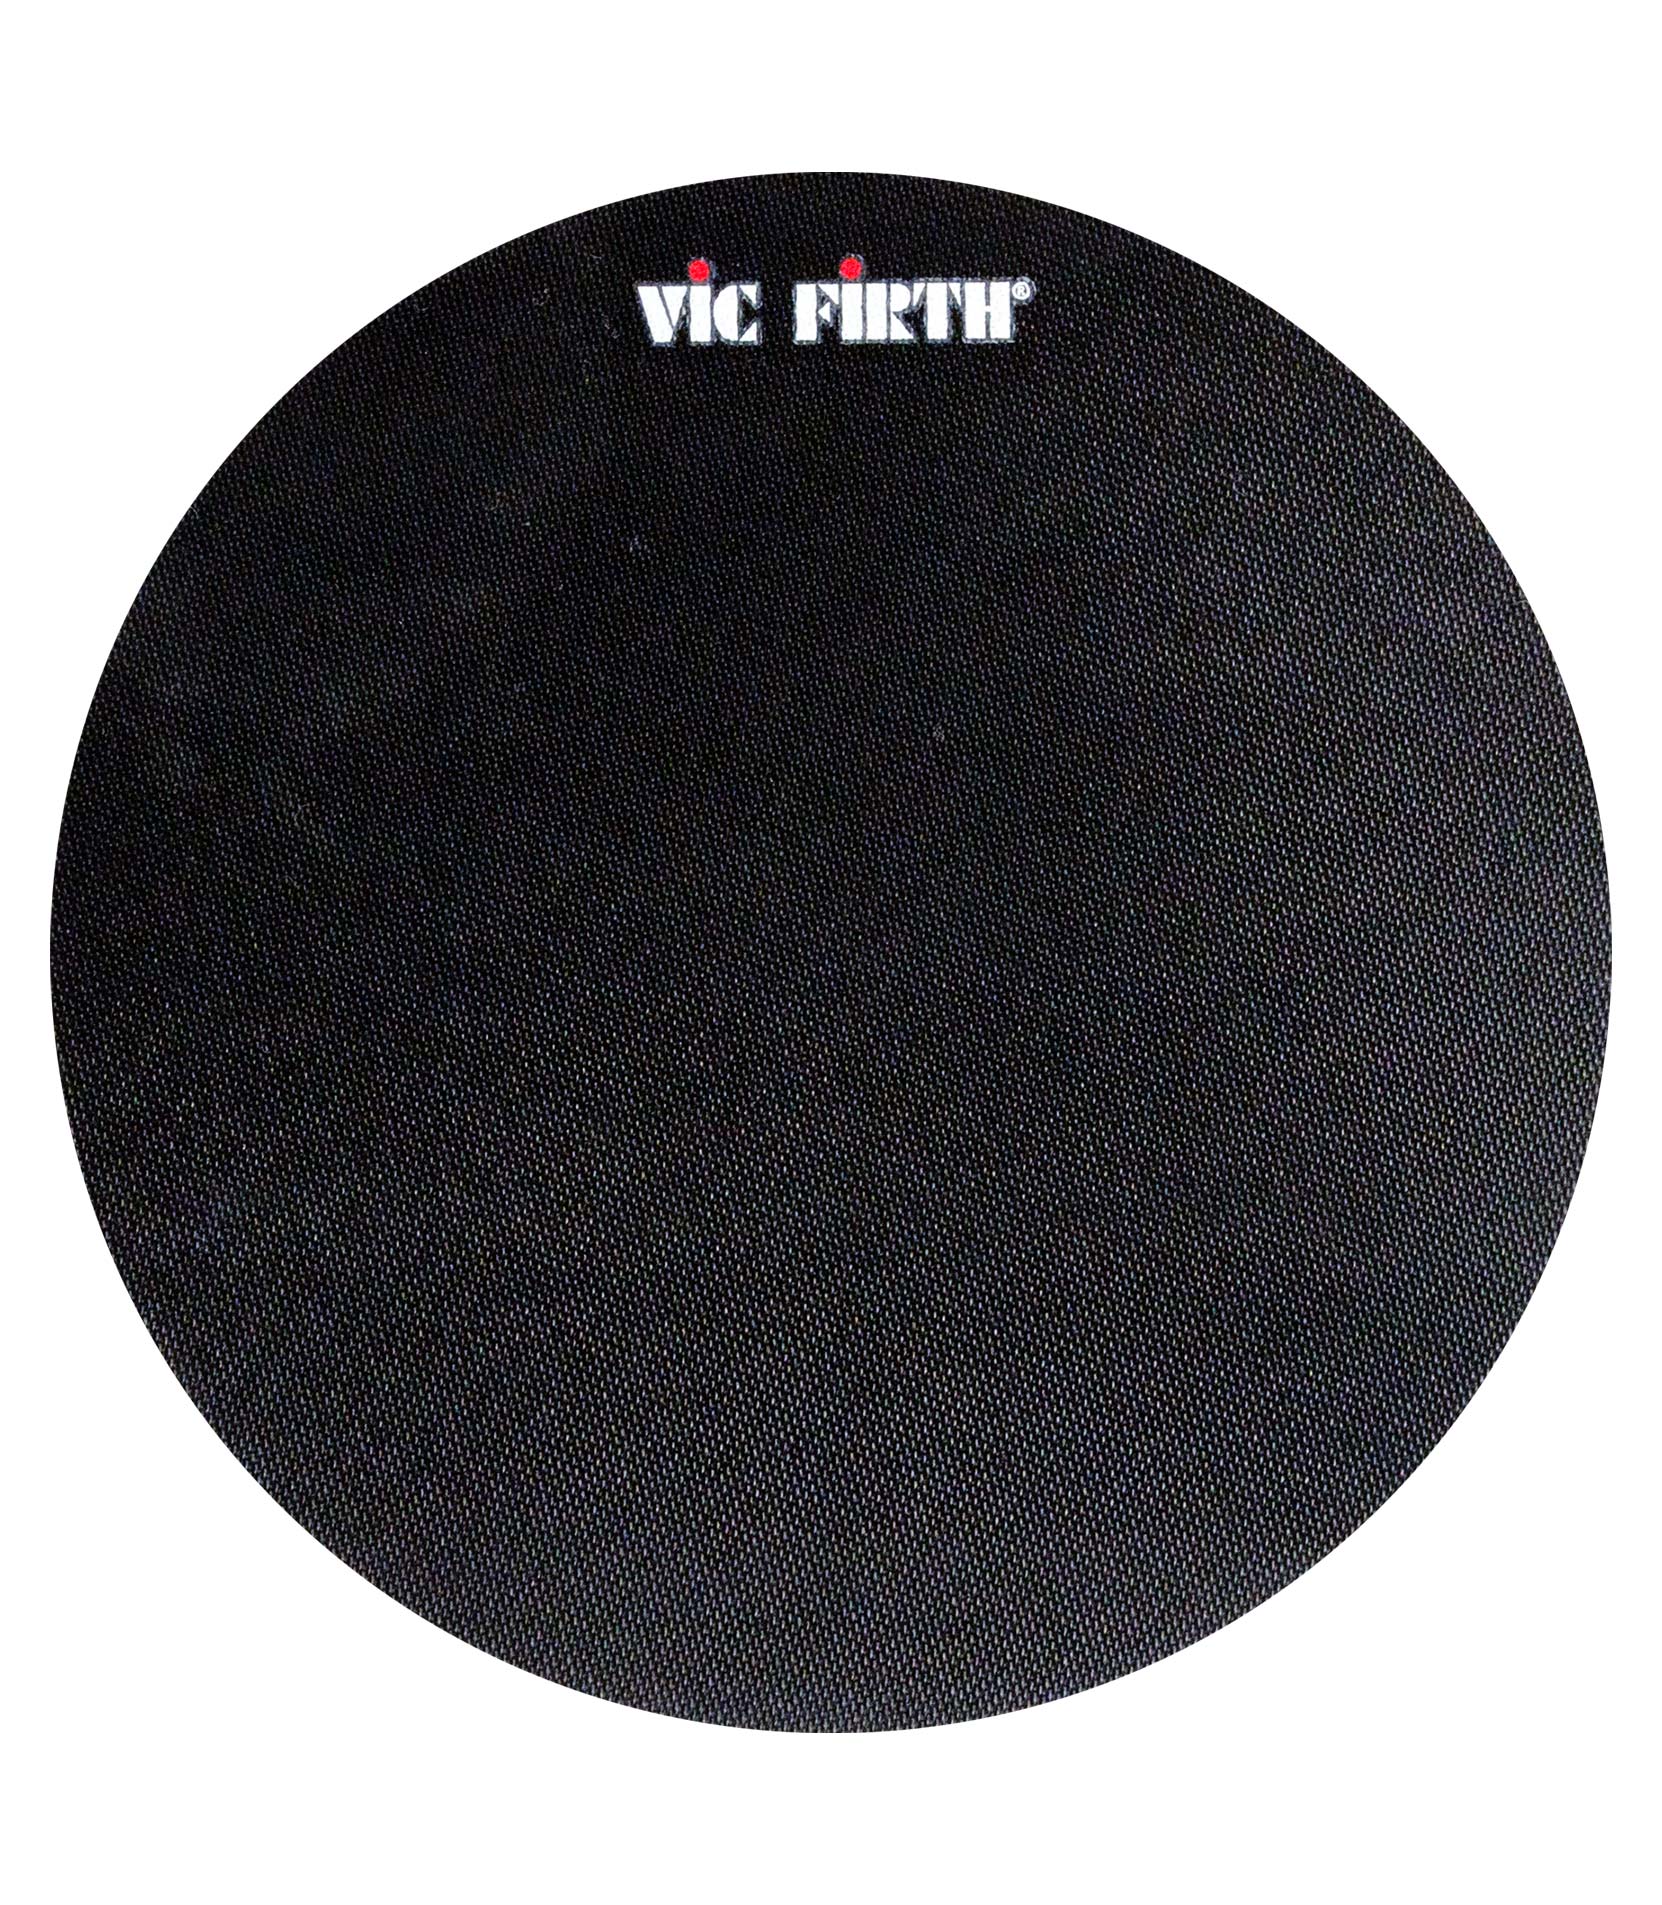 Vicfirth - VICMUTE12